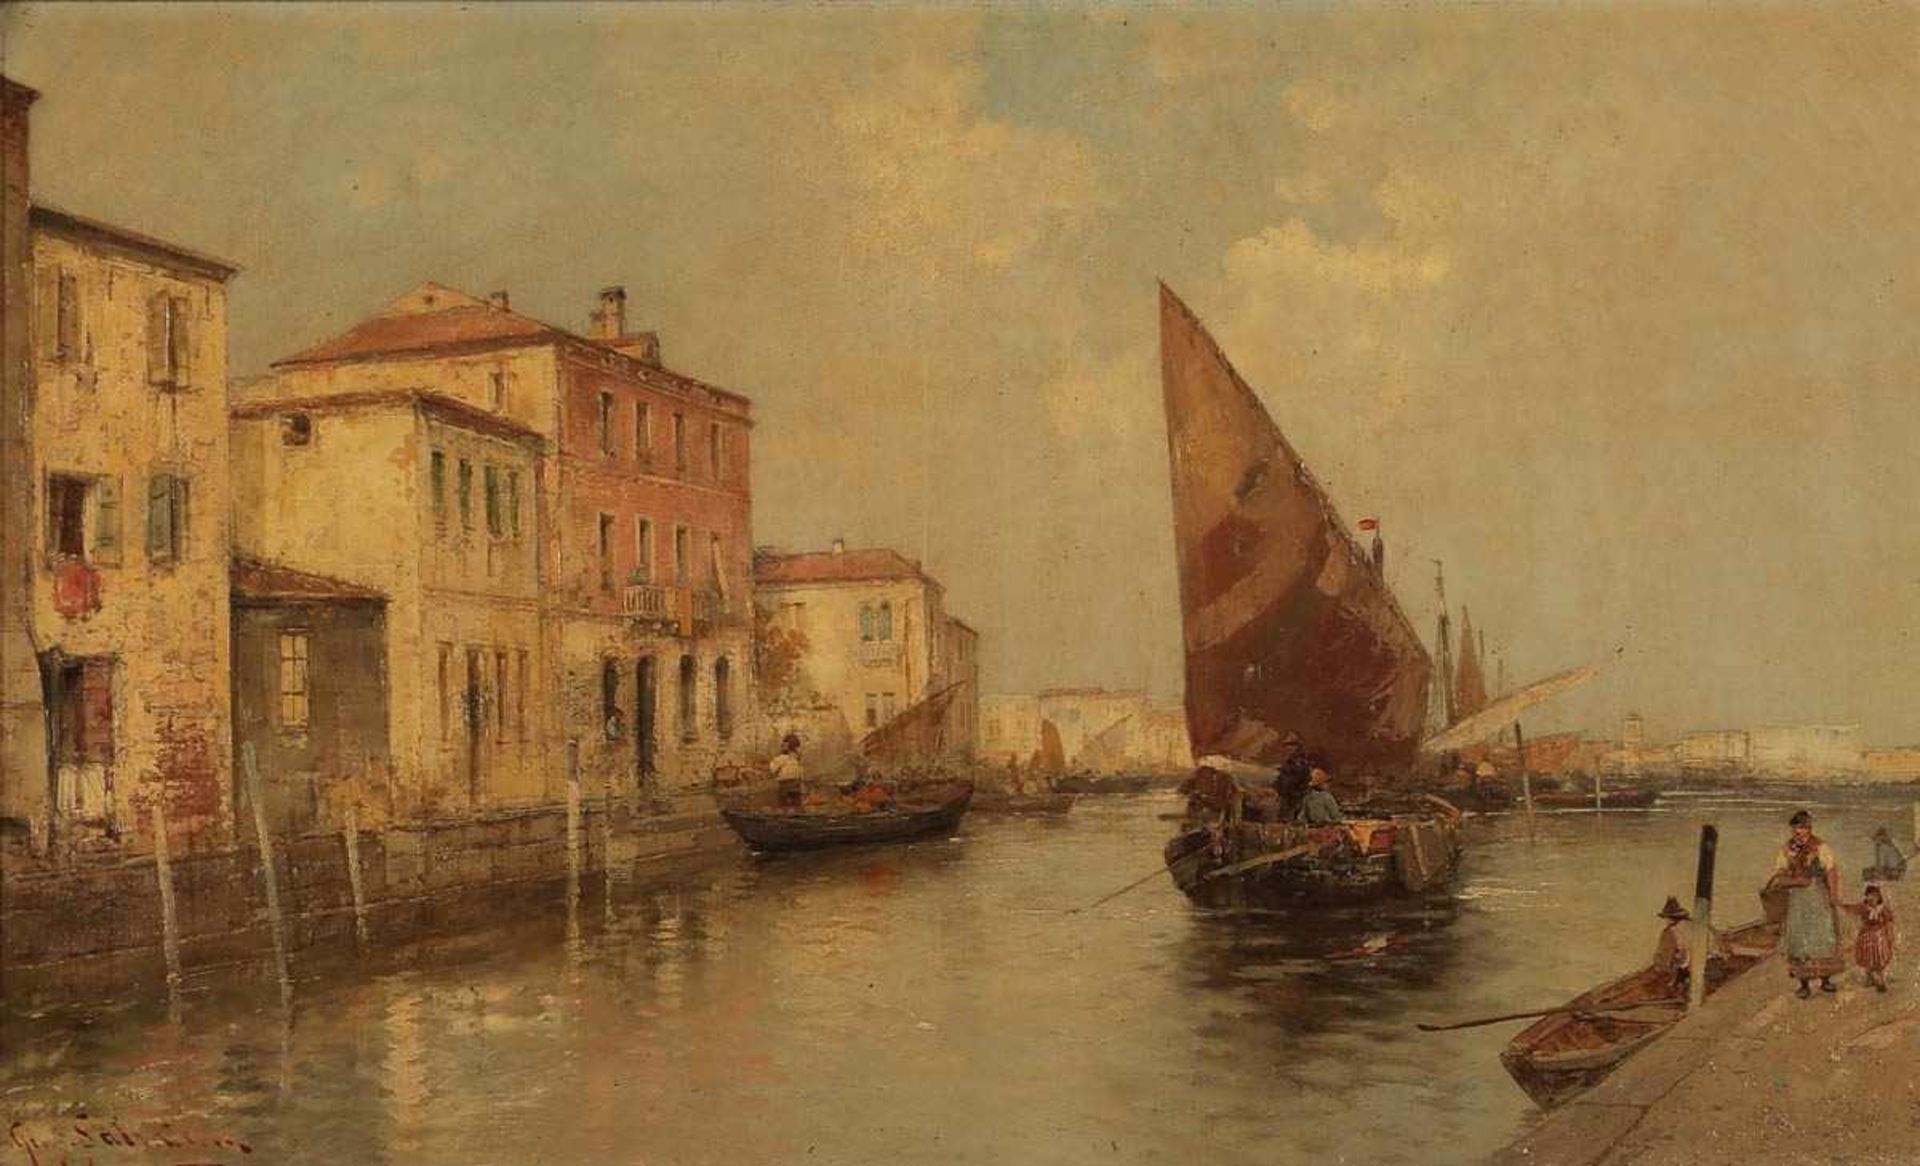 Giuseppe Salvaterra Italienischer Künstler um 1900 - "Venedig" - Öl/Lwd. 50 x 82 cm. Sign. l. u.: